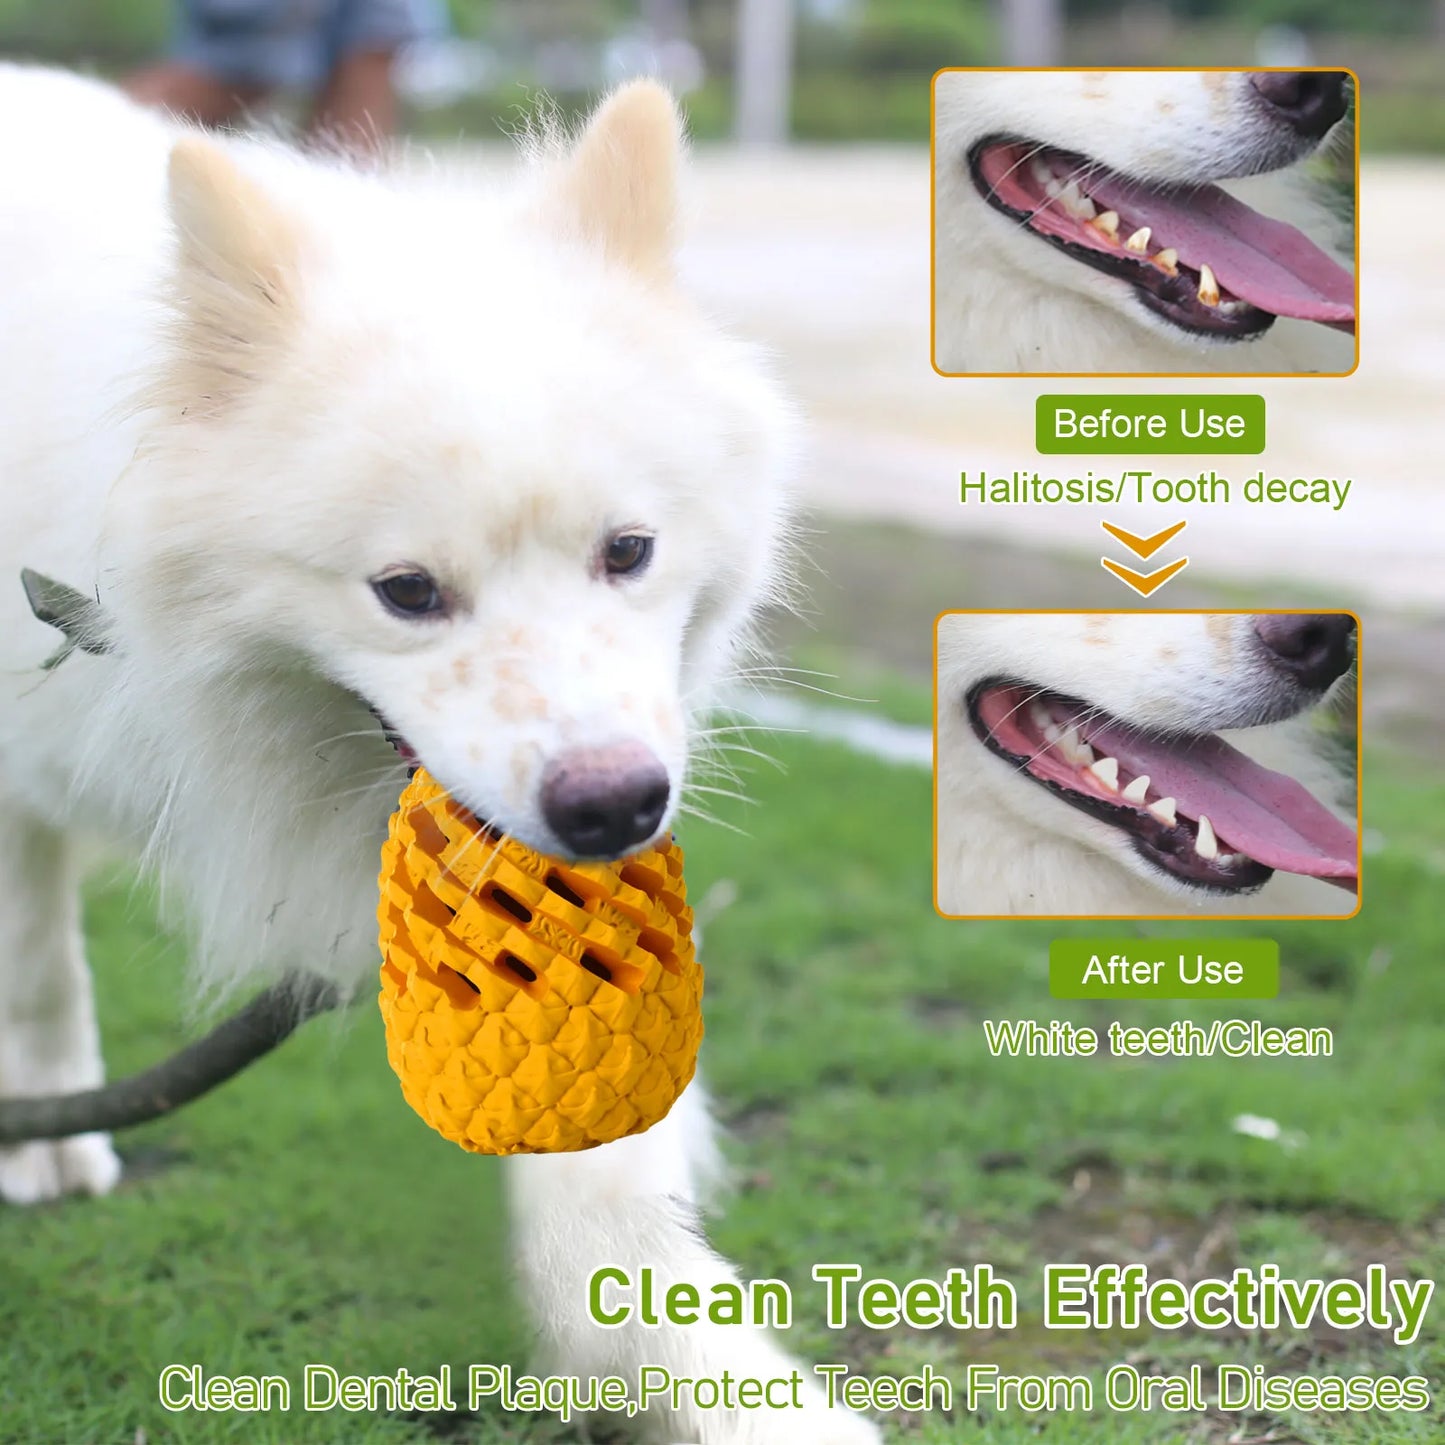 Dog Chew Pineapple Treat Toy